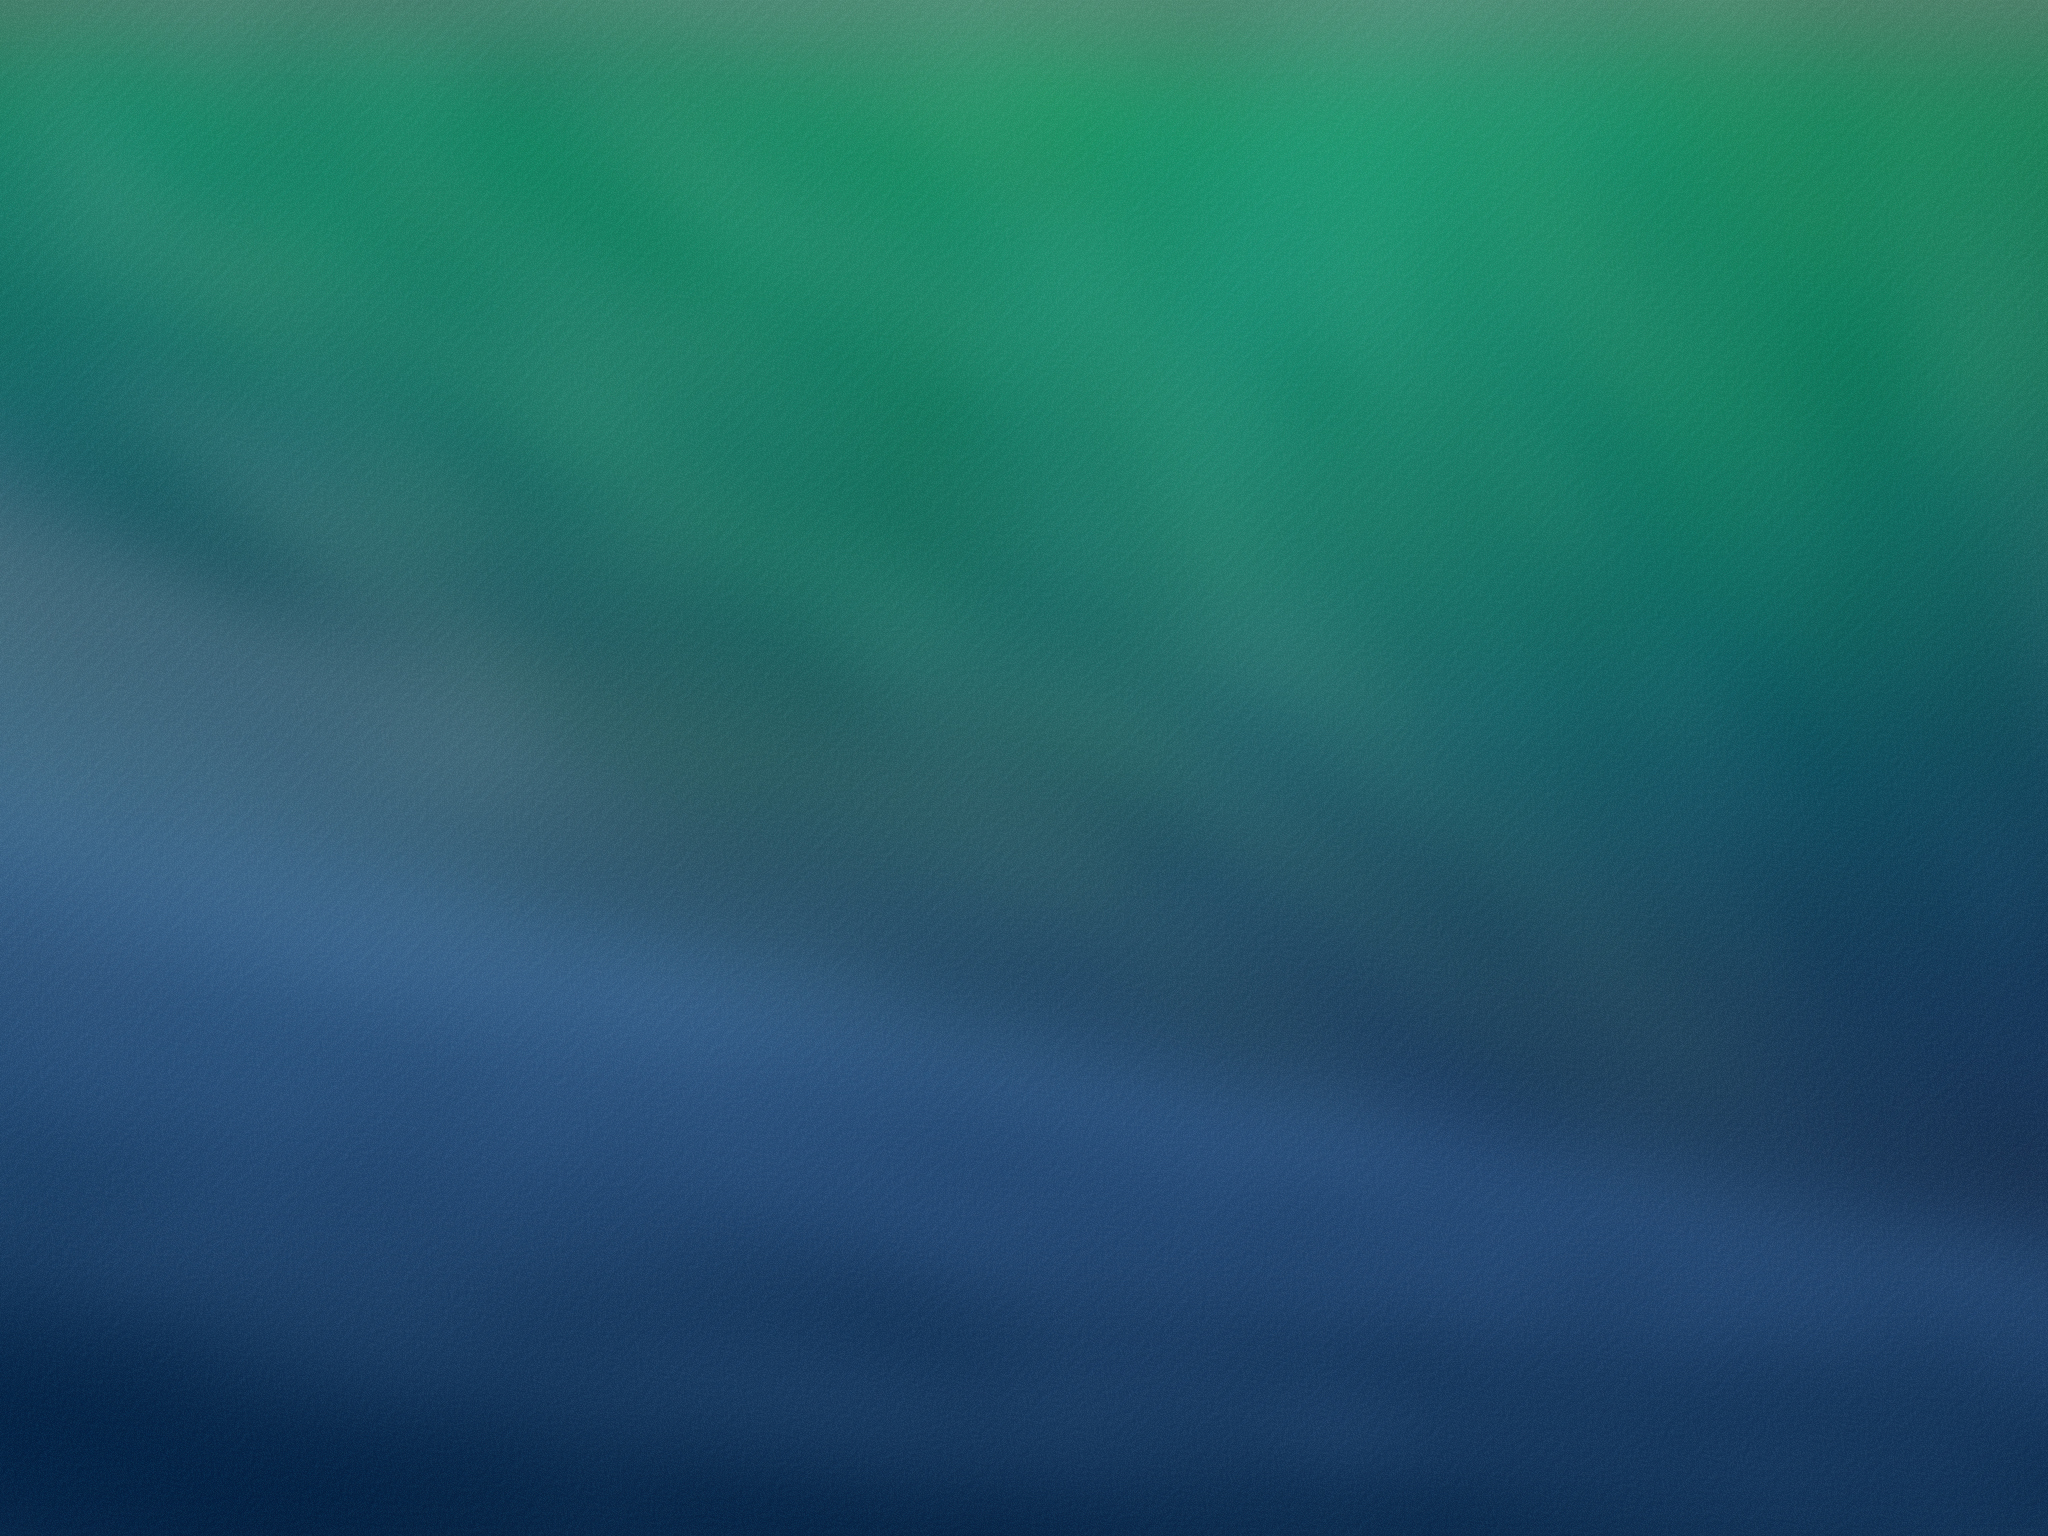 sfondi per ipad hd 2048x1536,blu,verde,acqua,turchese,cielo